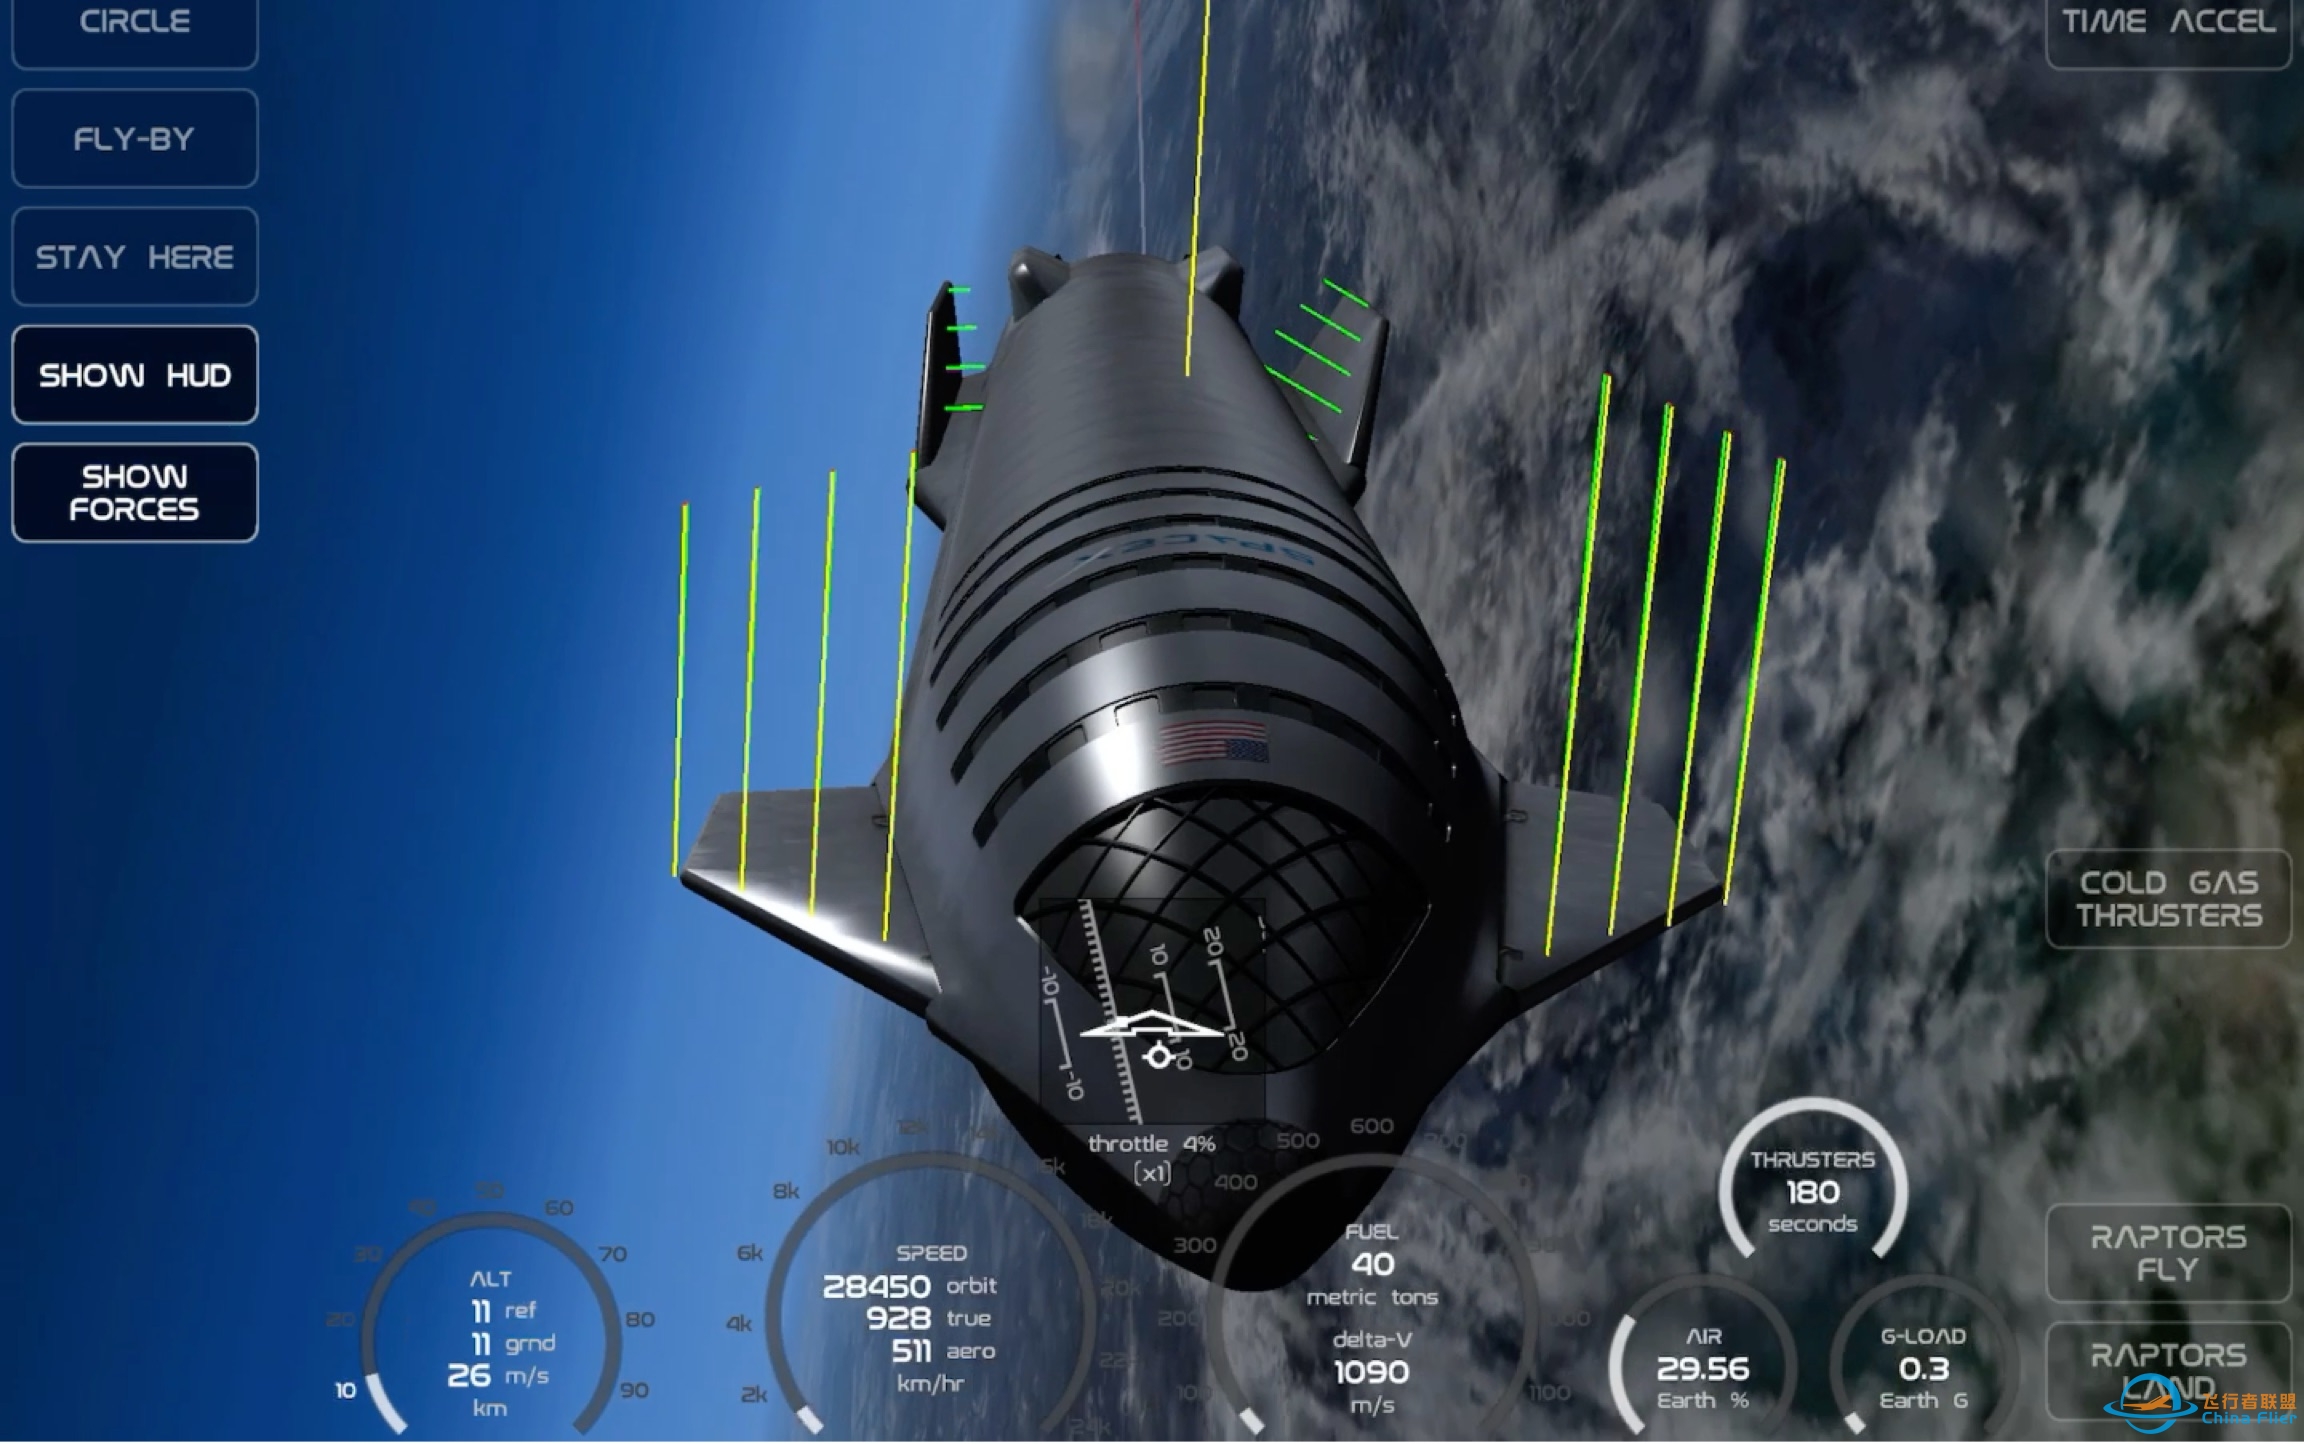 [SpaceX]用X-Plane: Starship模拟星舰高空飞行测试-7280 